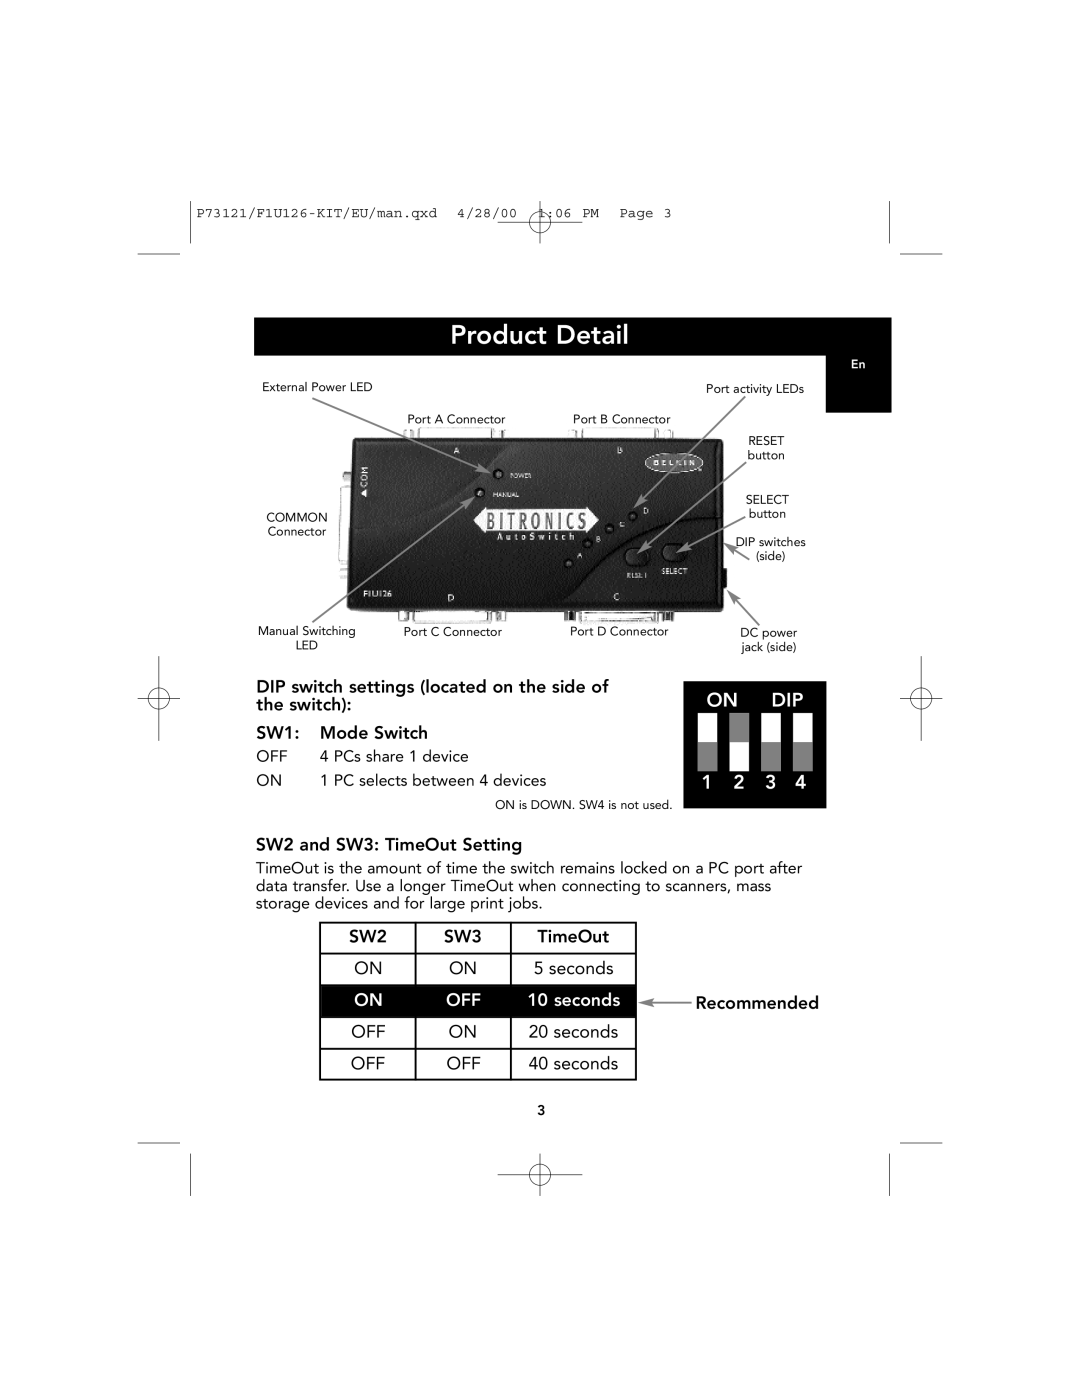 Belkin F1U126-KIT, P73121 user manual Product Detail, ON DIP 1 2 3, seconds 